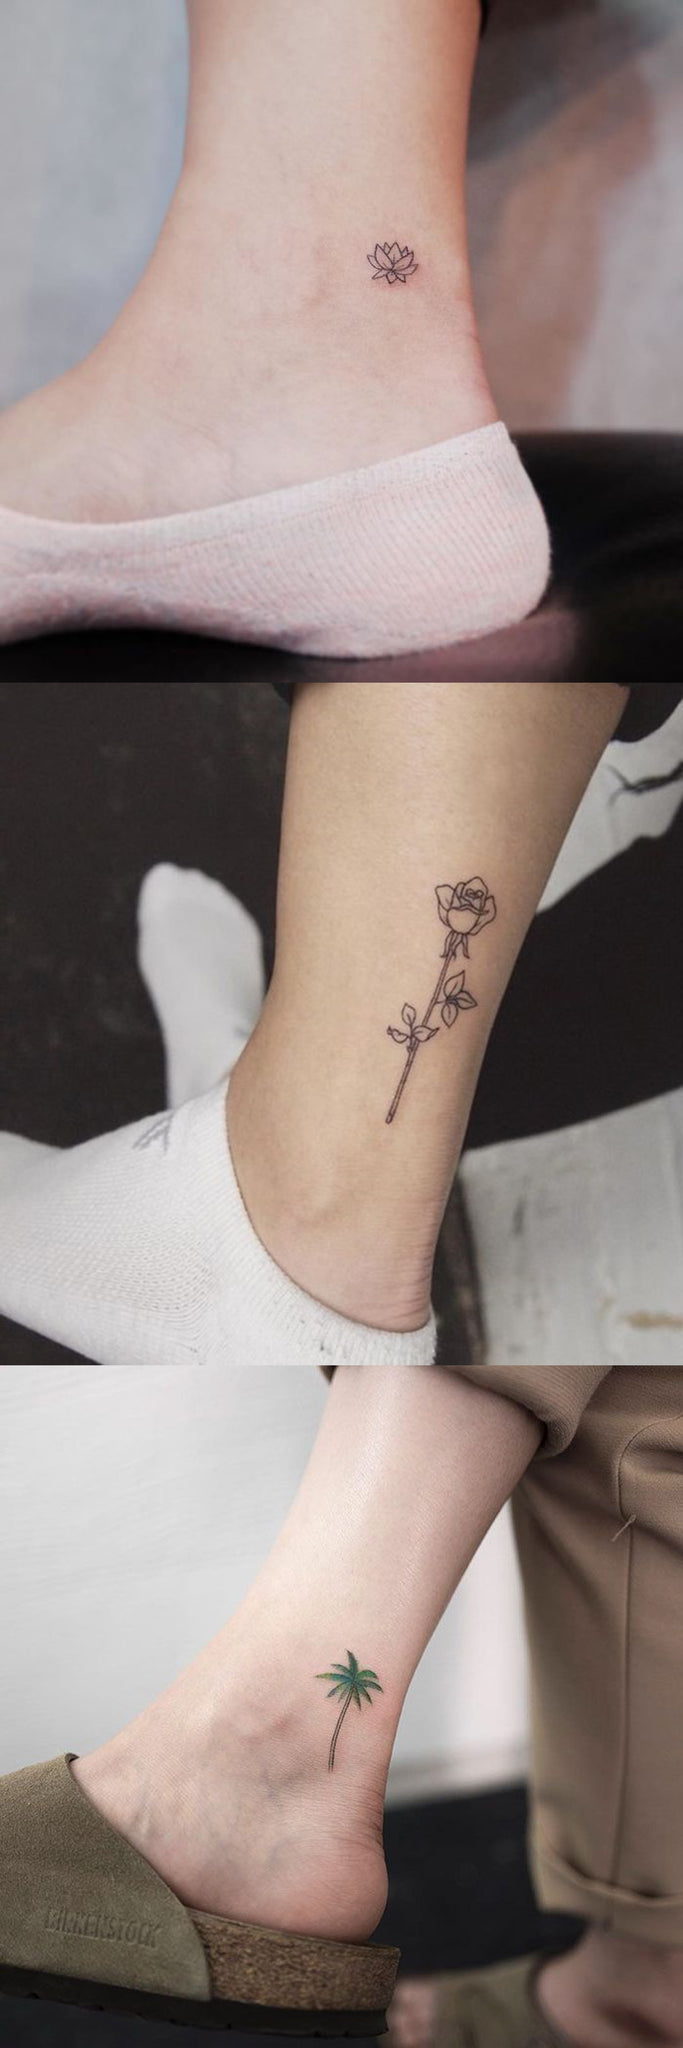 Cute Small Ankle Tattoos Ideas at MyBodiArt.com - Tiny Lotus Rose Palm Tree Foot Tatt 